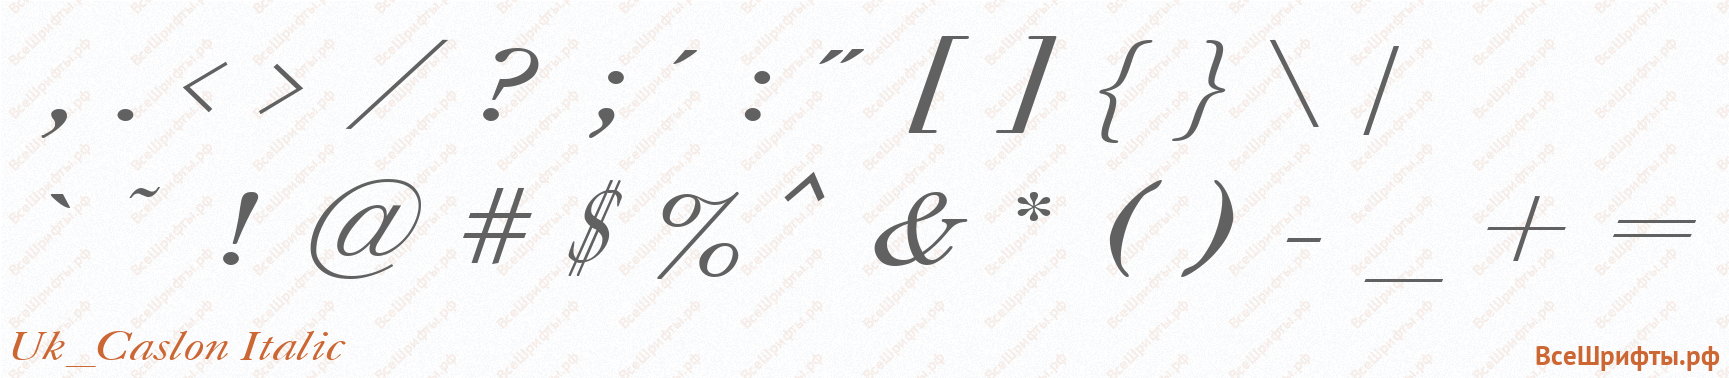 Шрифт Uk_Caslon Italic со знаками препинания и пунктуации